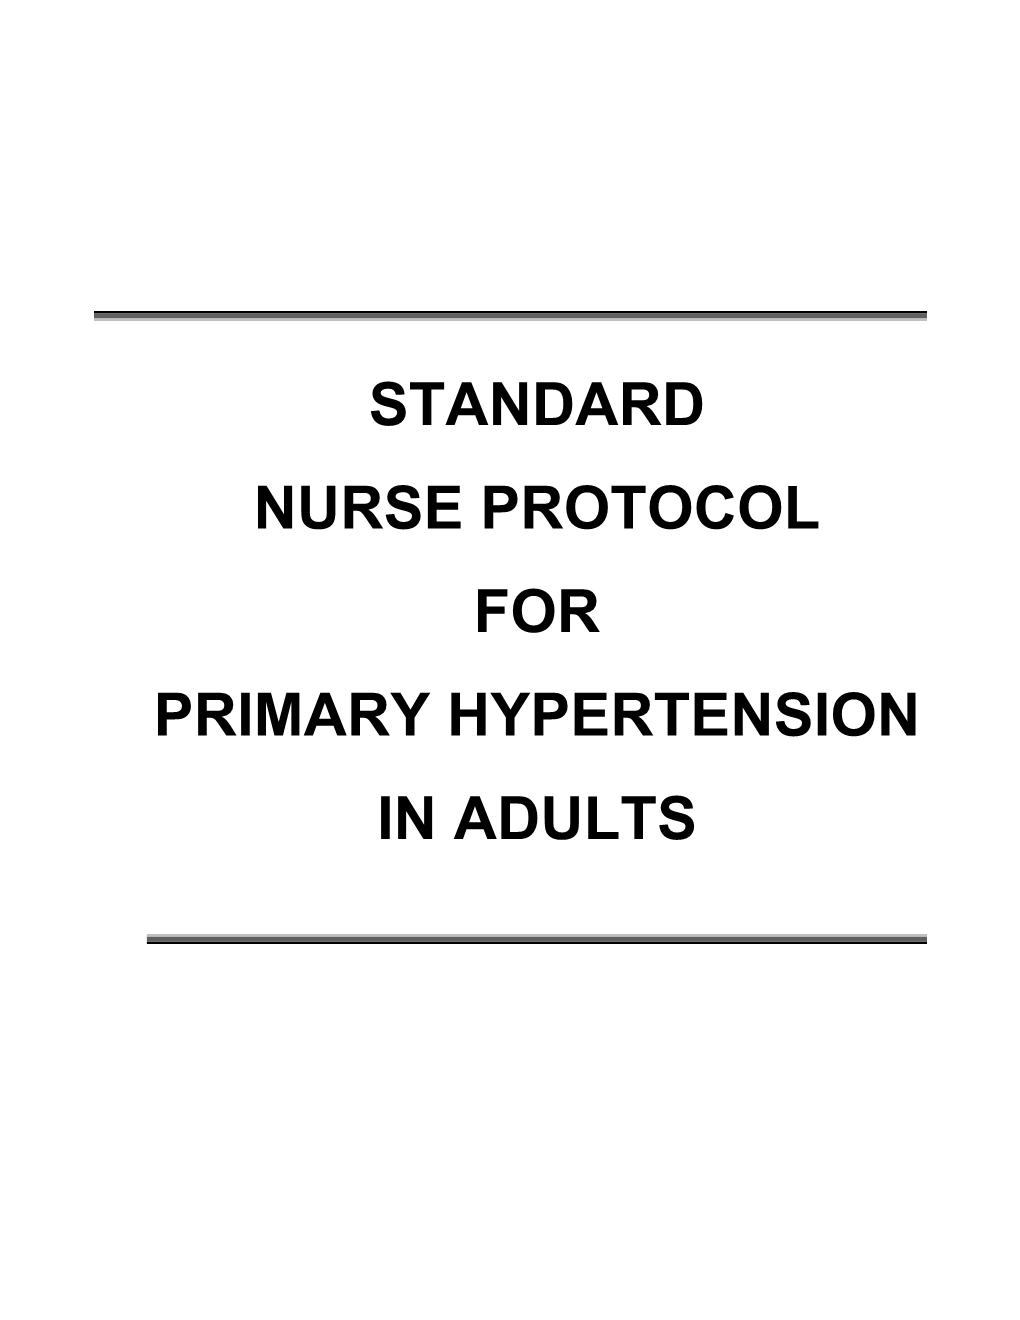 Standard Nurse Protocol for Primary Hypertension